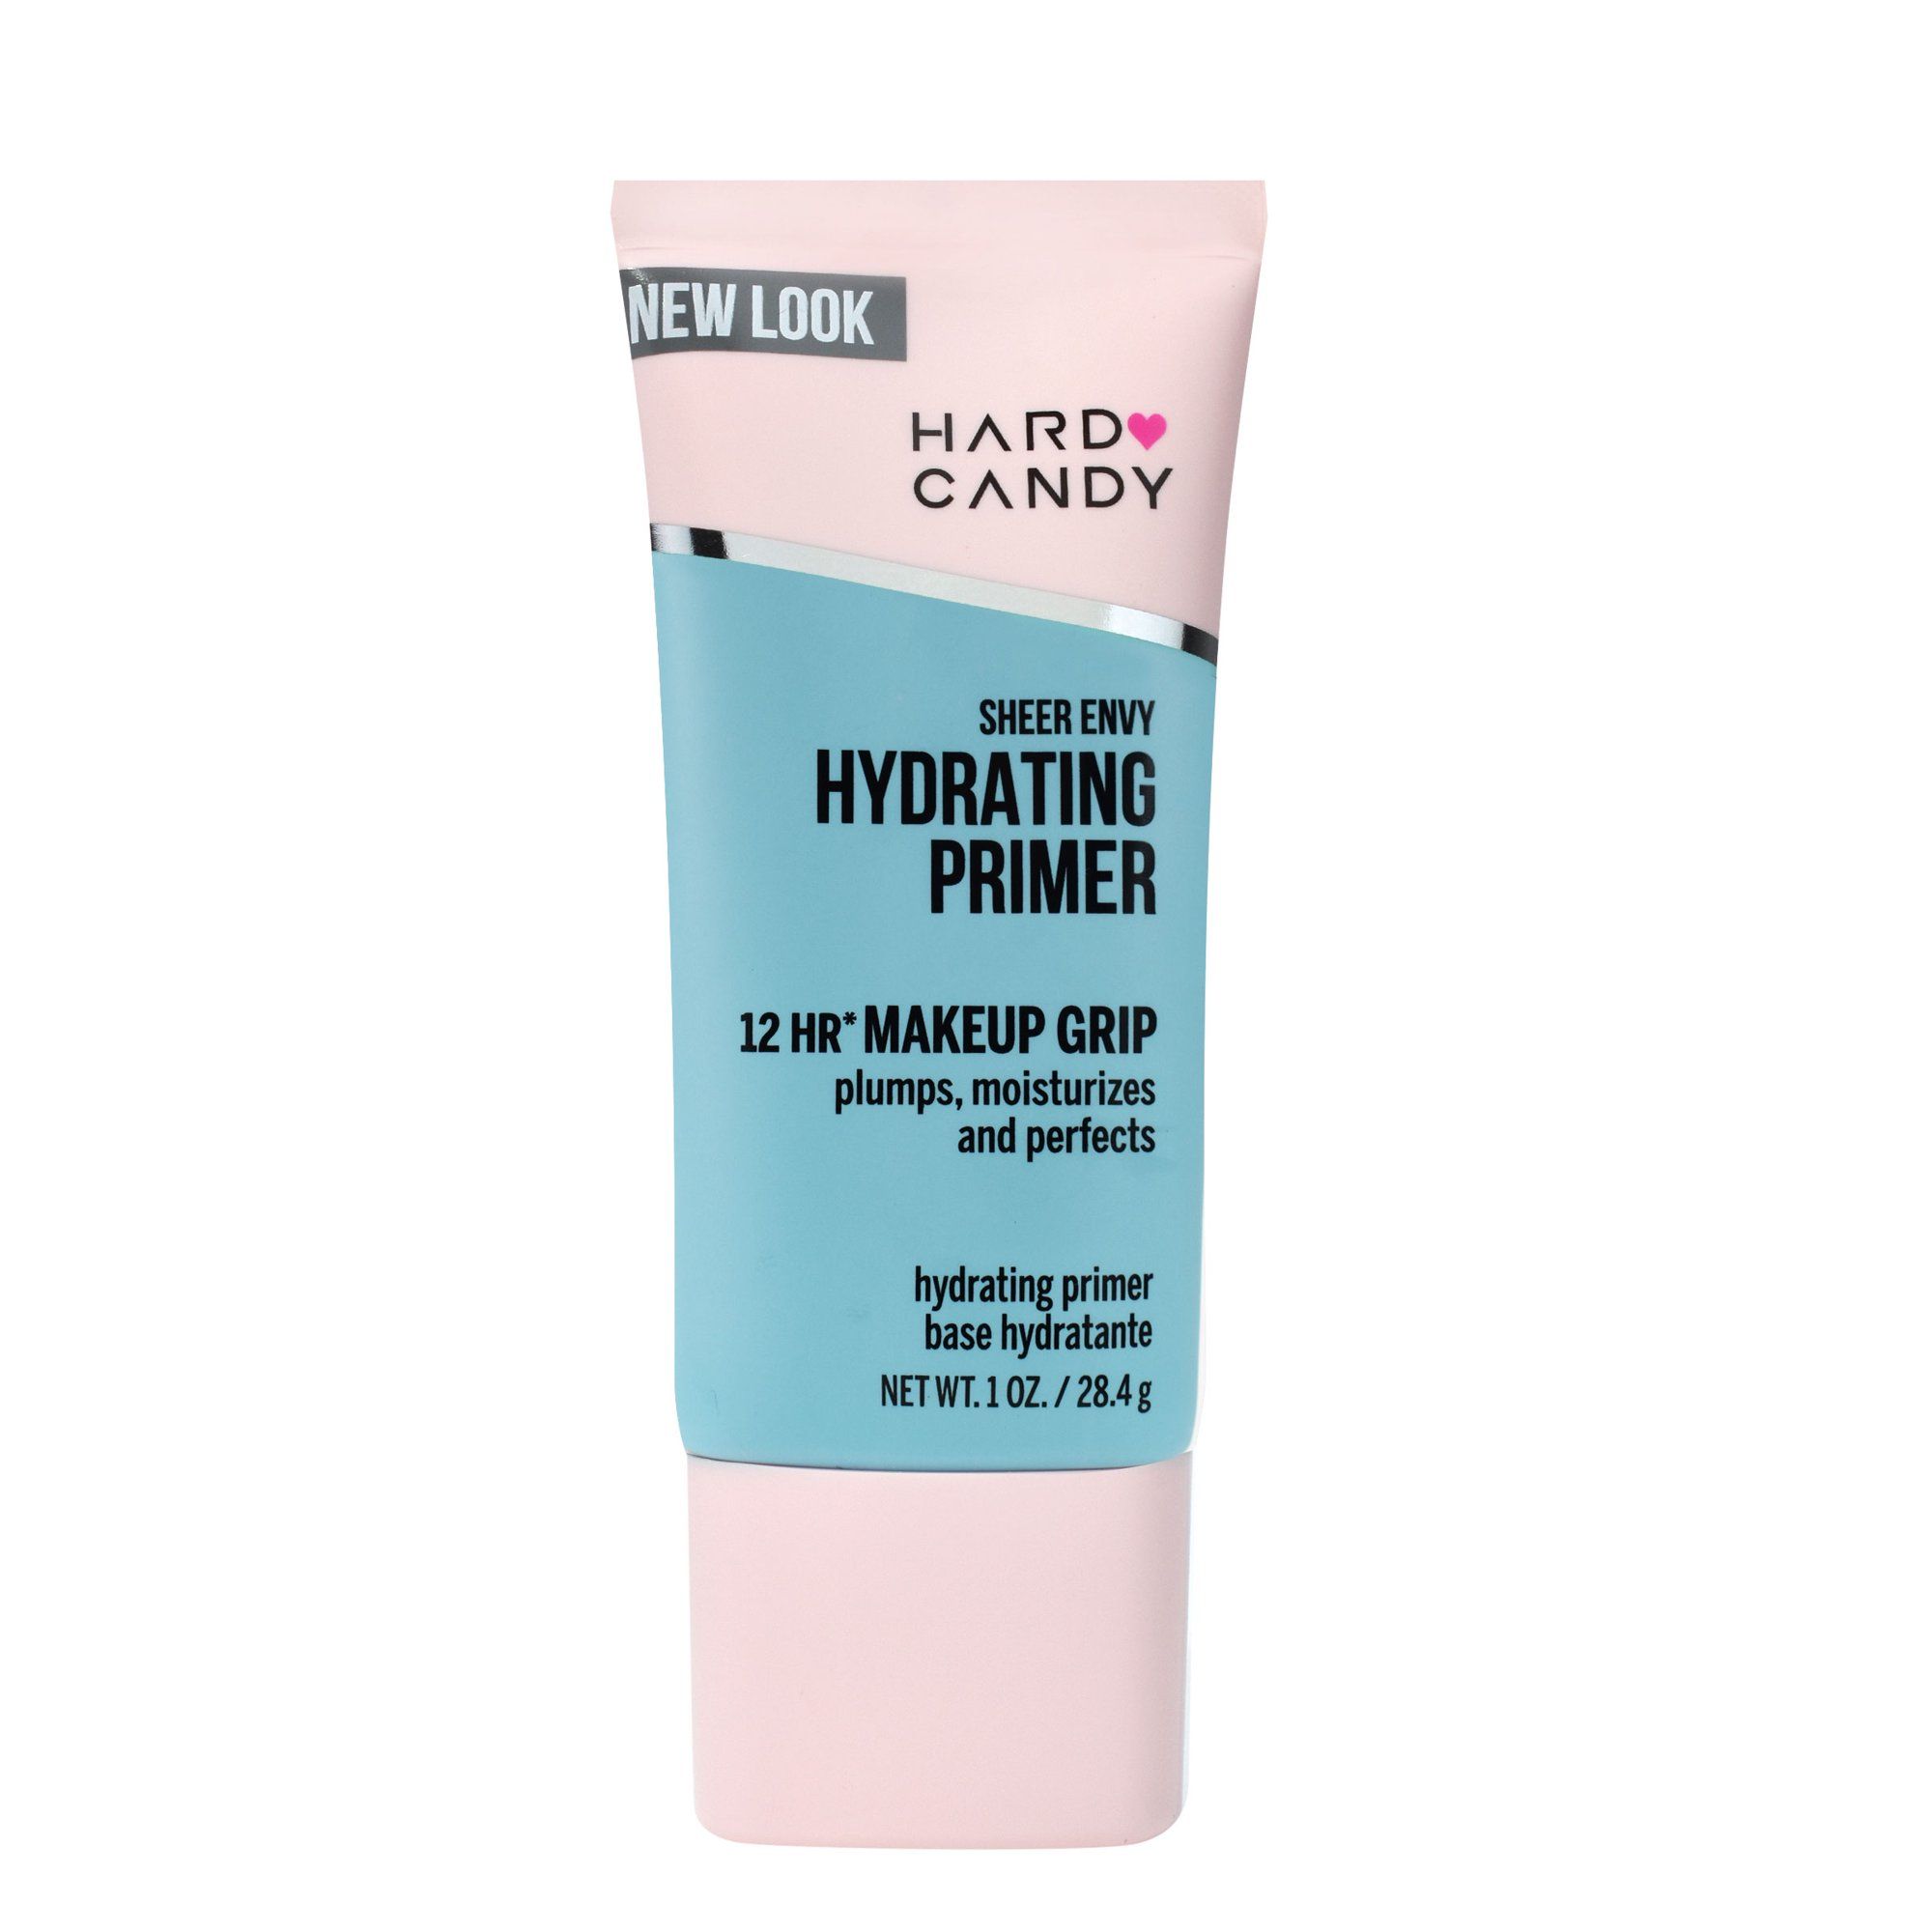 Hard Candy Hydrating 12 Hour Makeup Grip + Hyaluronic Acid Primer | Walmart (US)